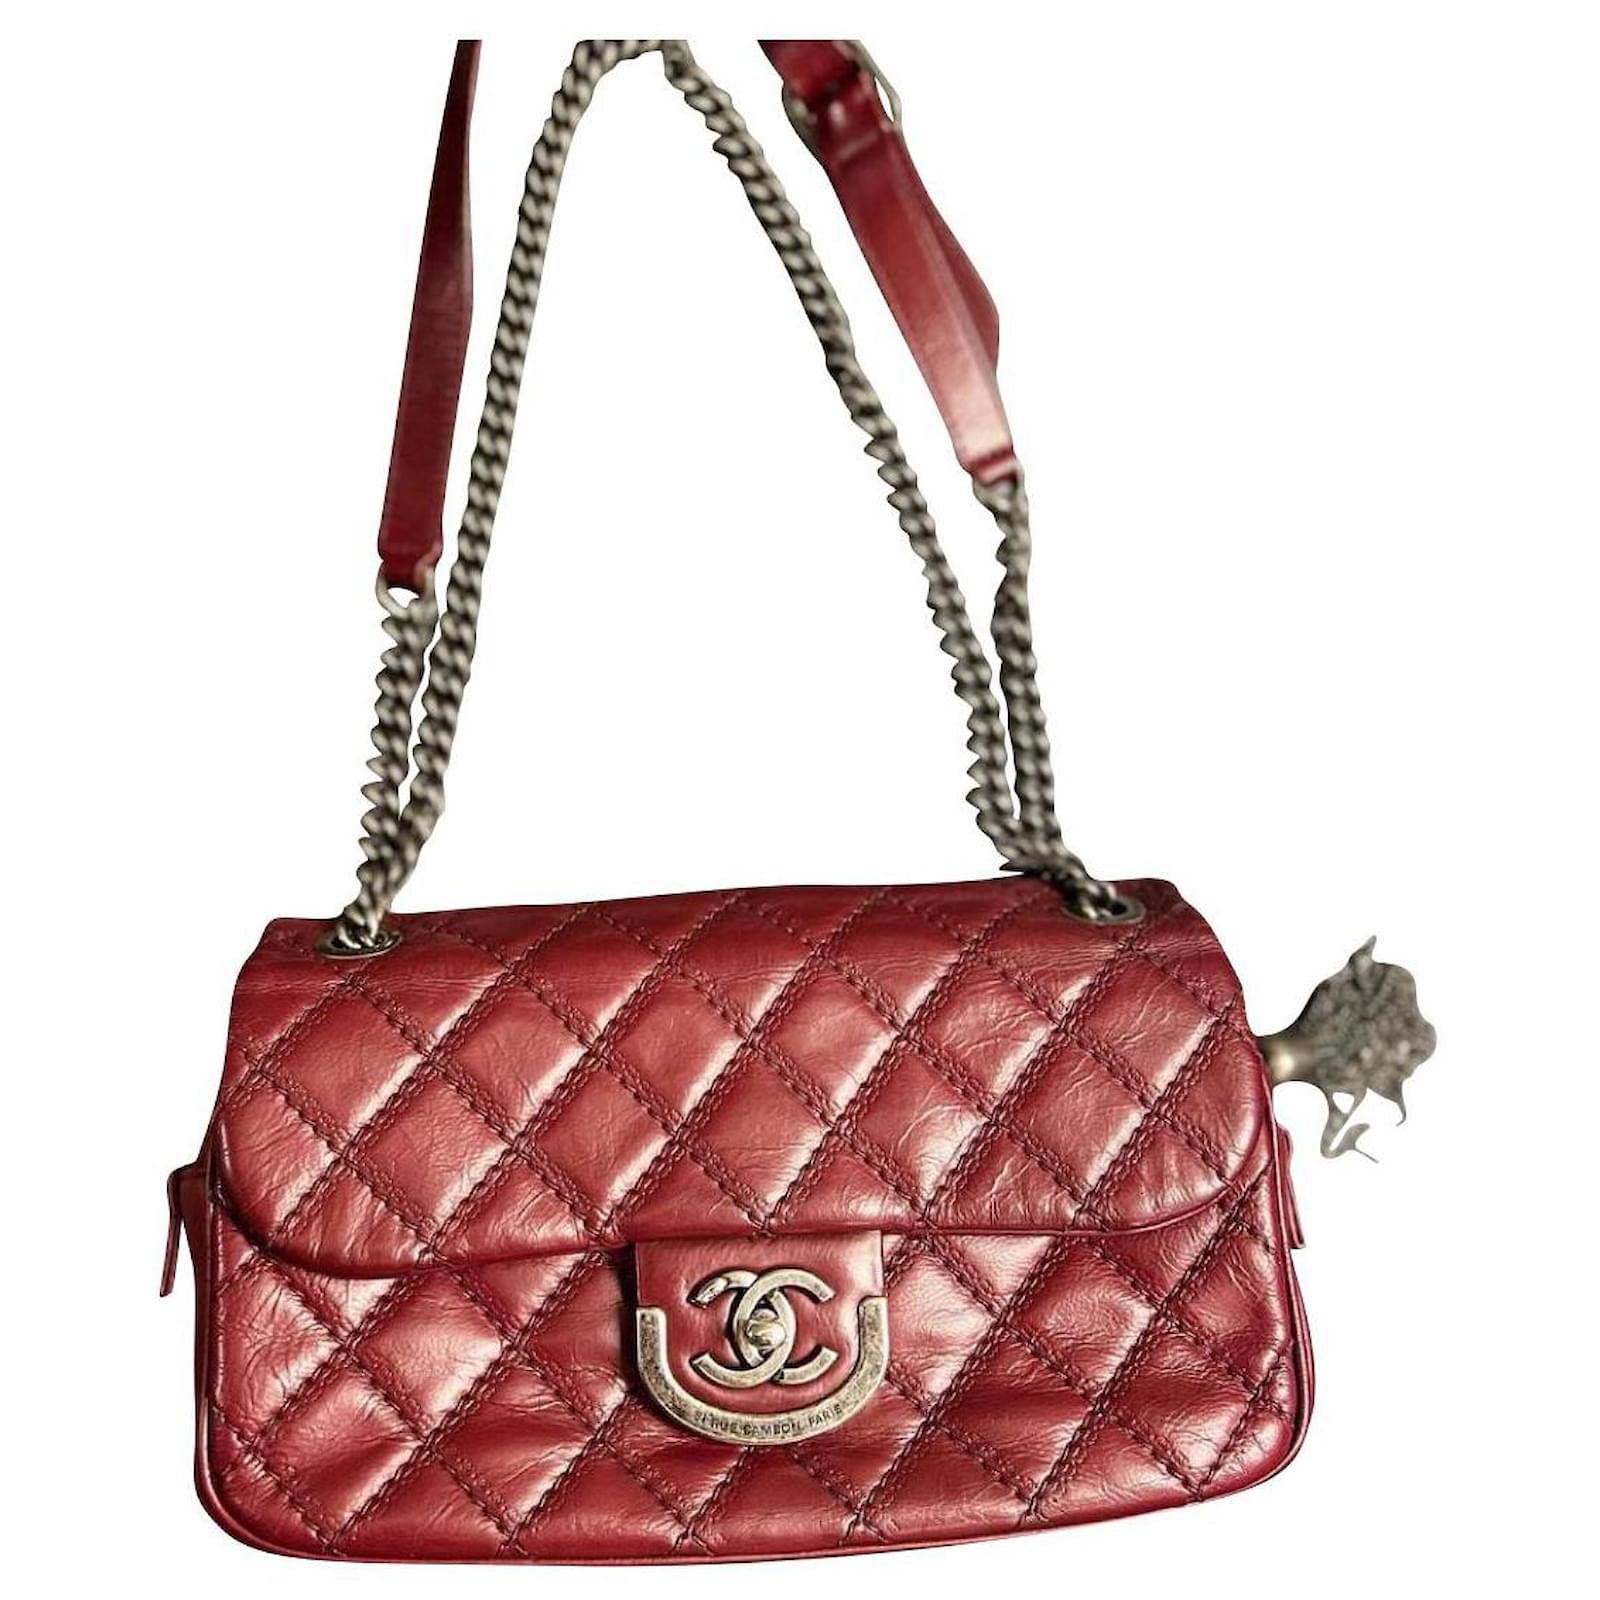 Chanel Burgundy/Red Paris Edinburgh Coco Sporran Flap Handbag size